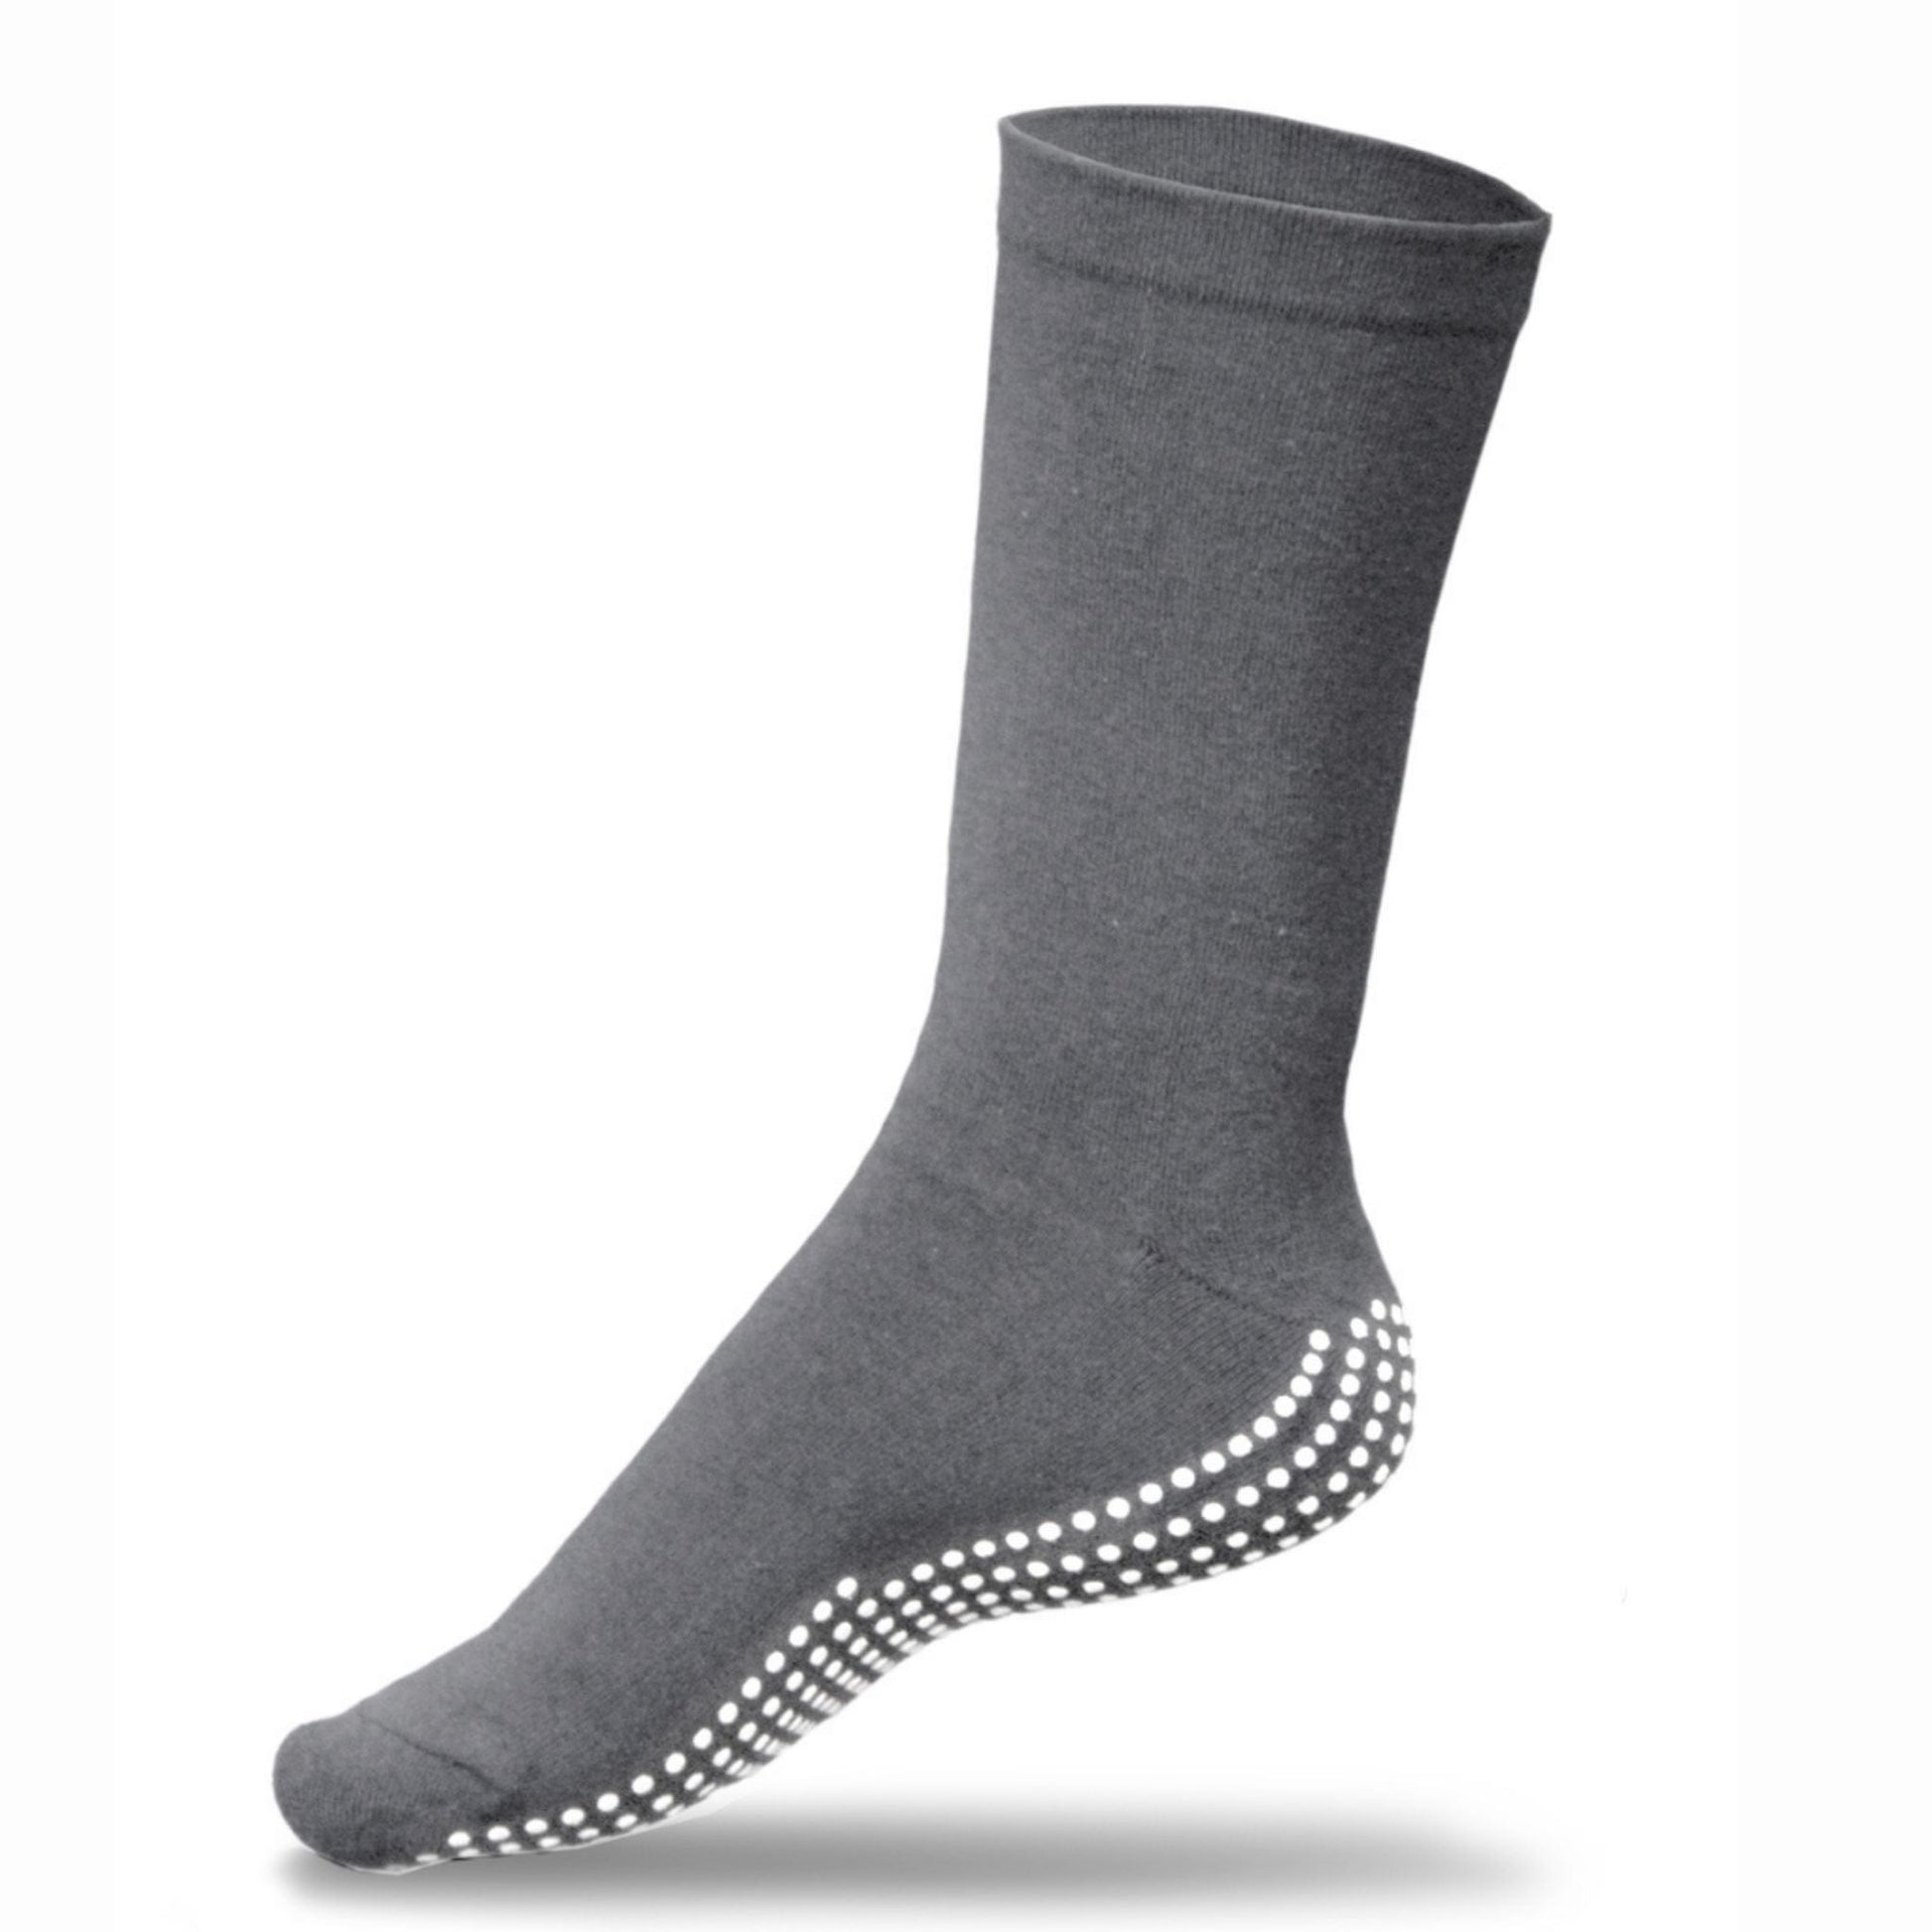 Gripperz Adult Grip Socks - Non Slip Circulation Socks - Caring Clothing